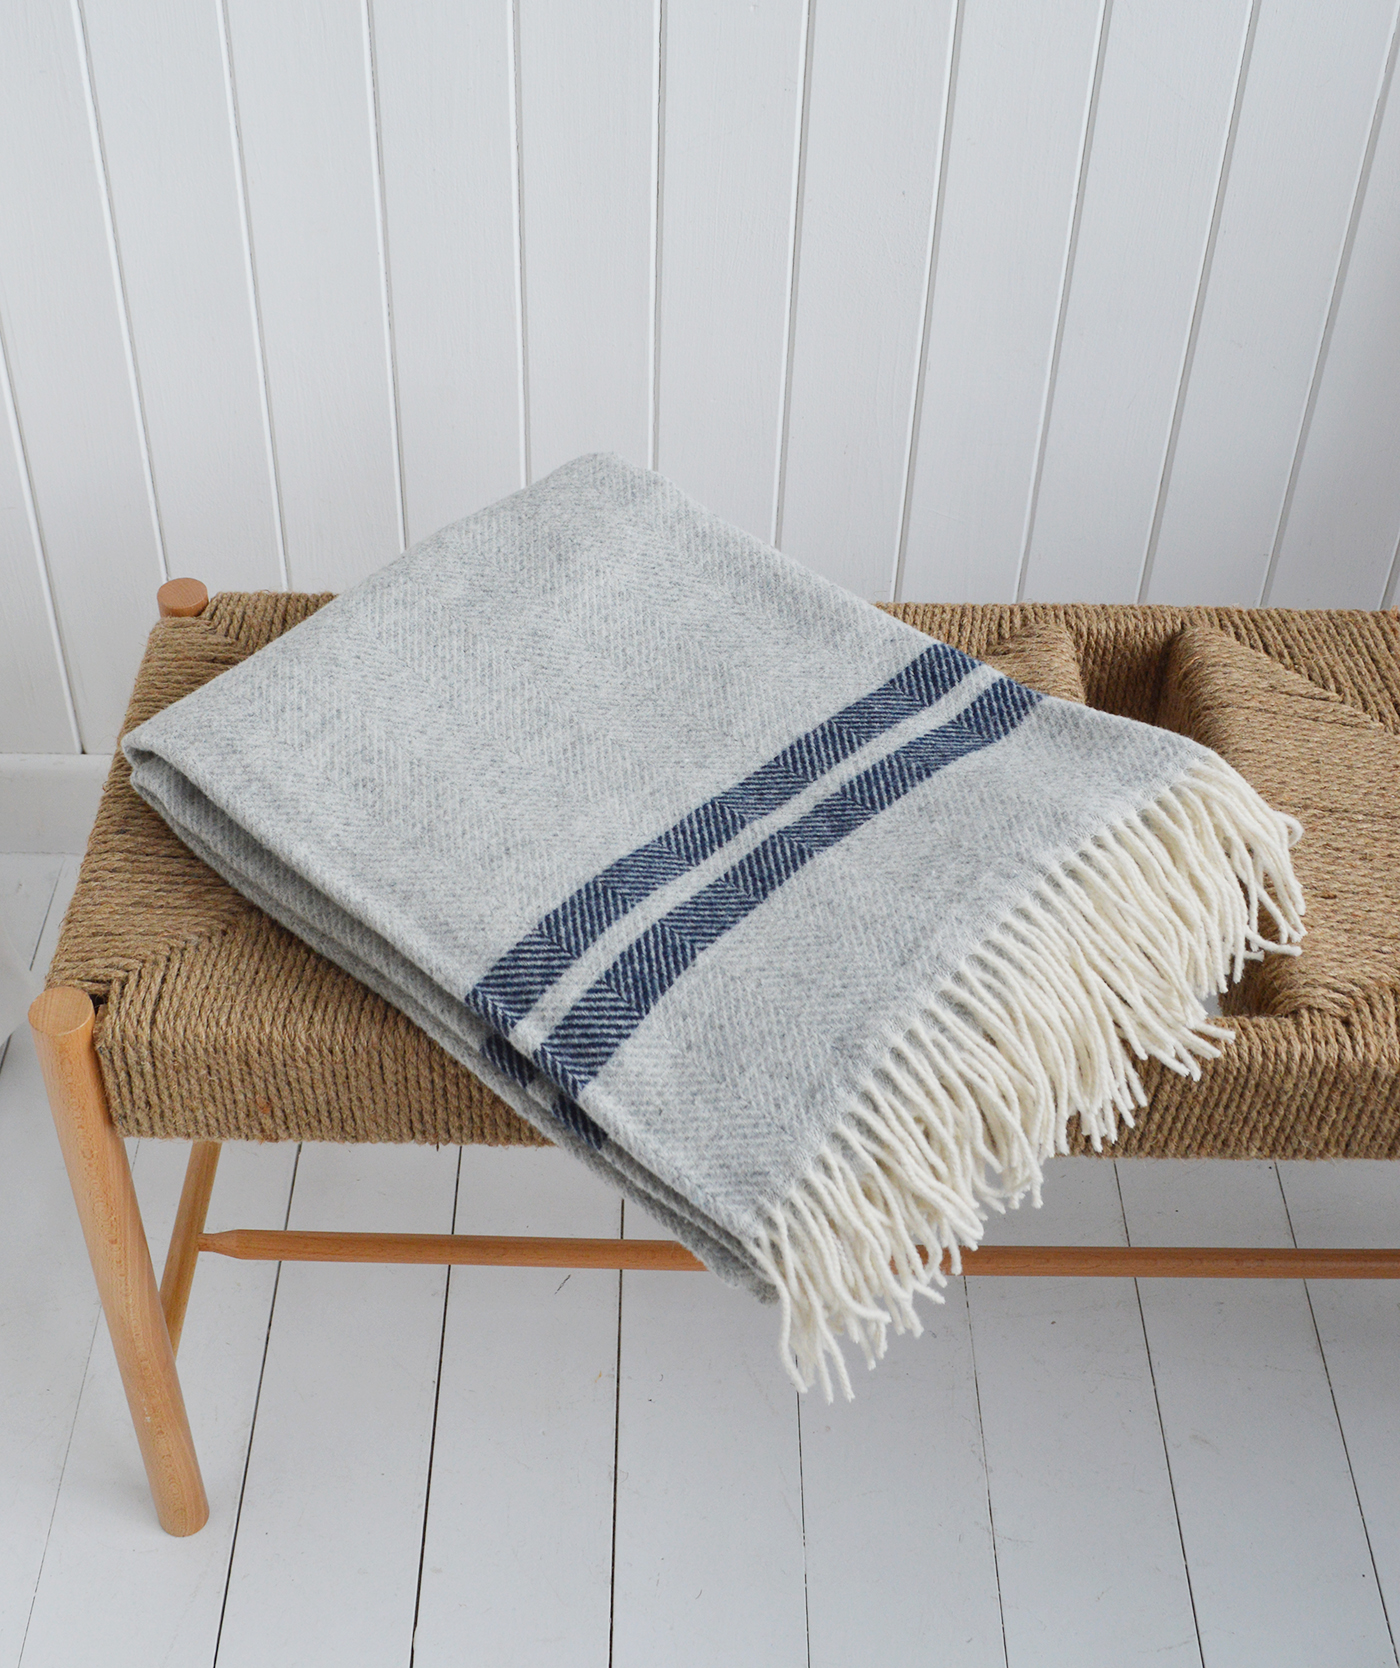 Sudbury blue and grey wool throws - New England Coastal Interiors and Furniture